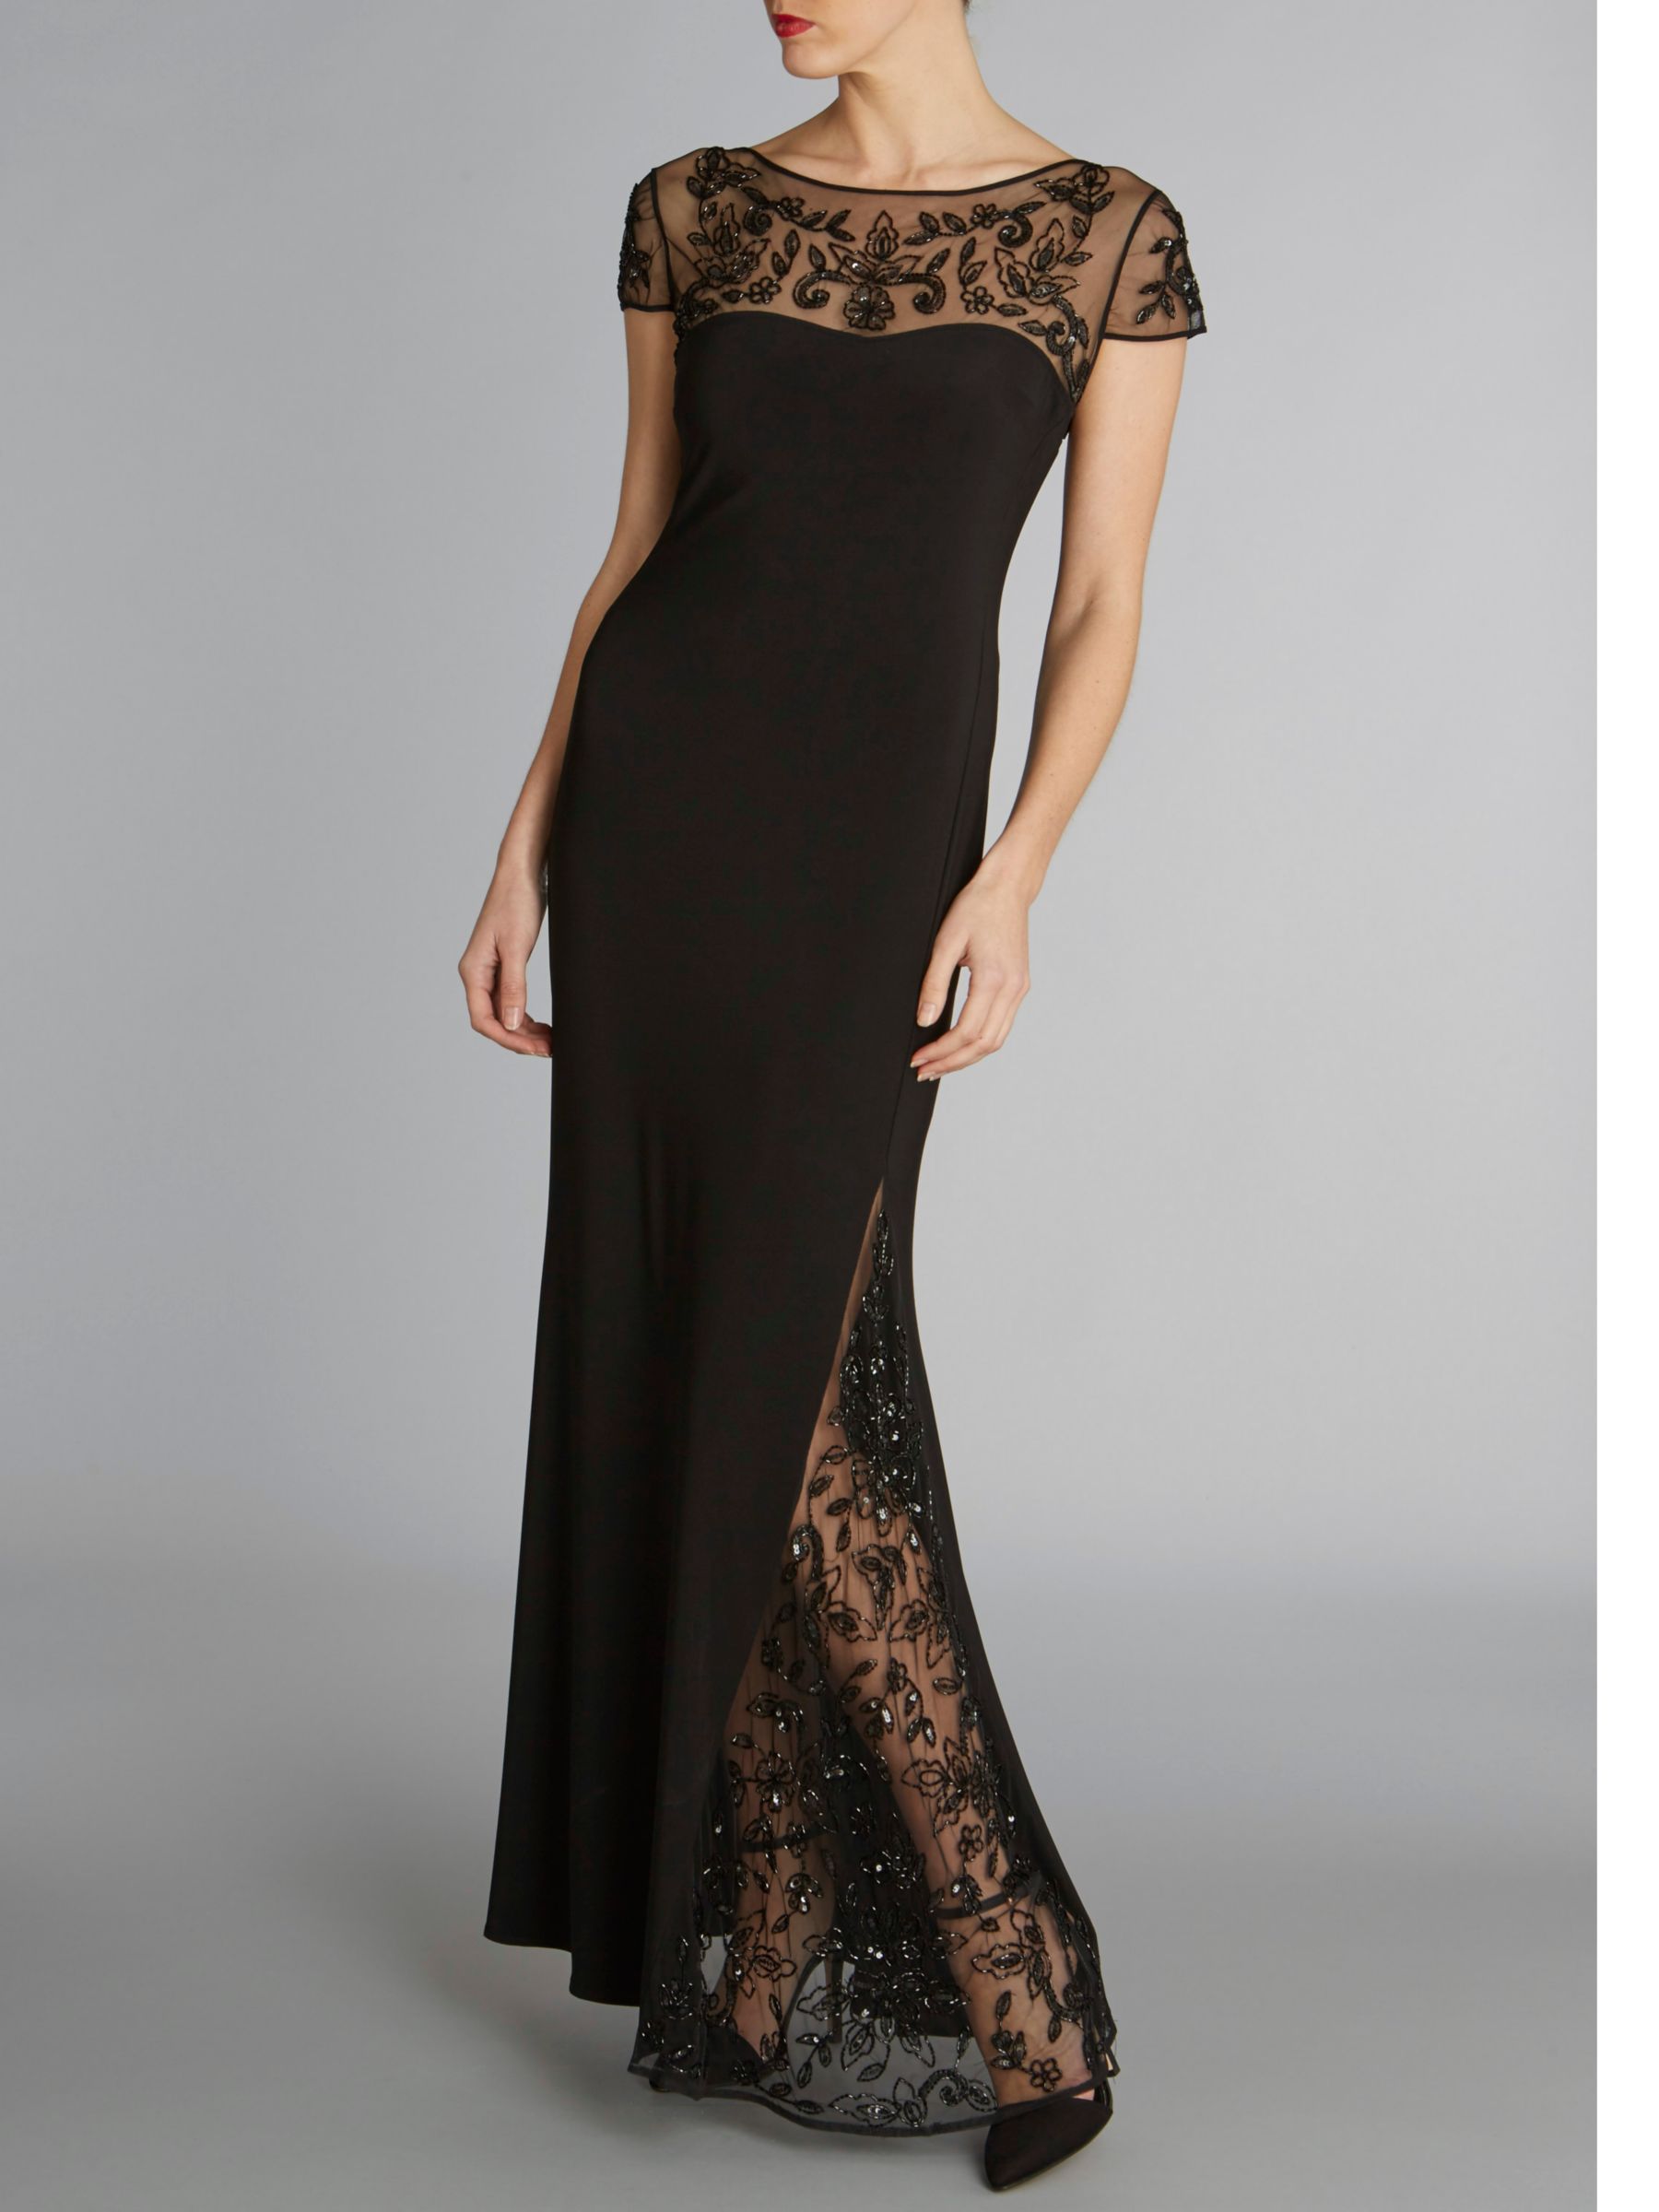 Gina Bacconi Beaded Jersey Maxi Dress, Black at John Lewis & Partners